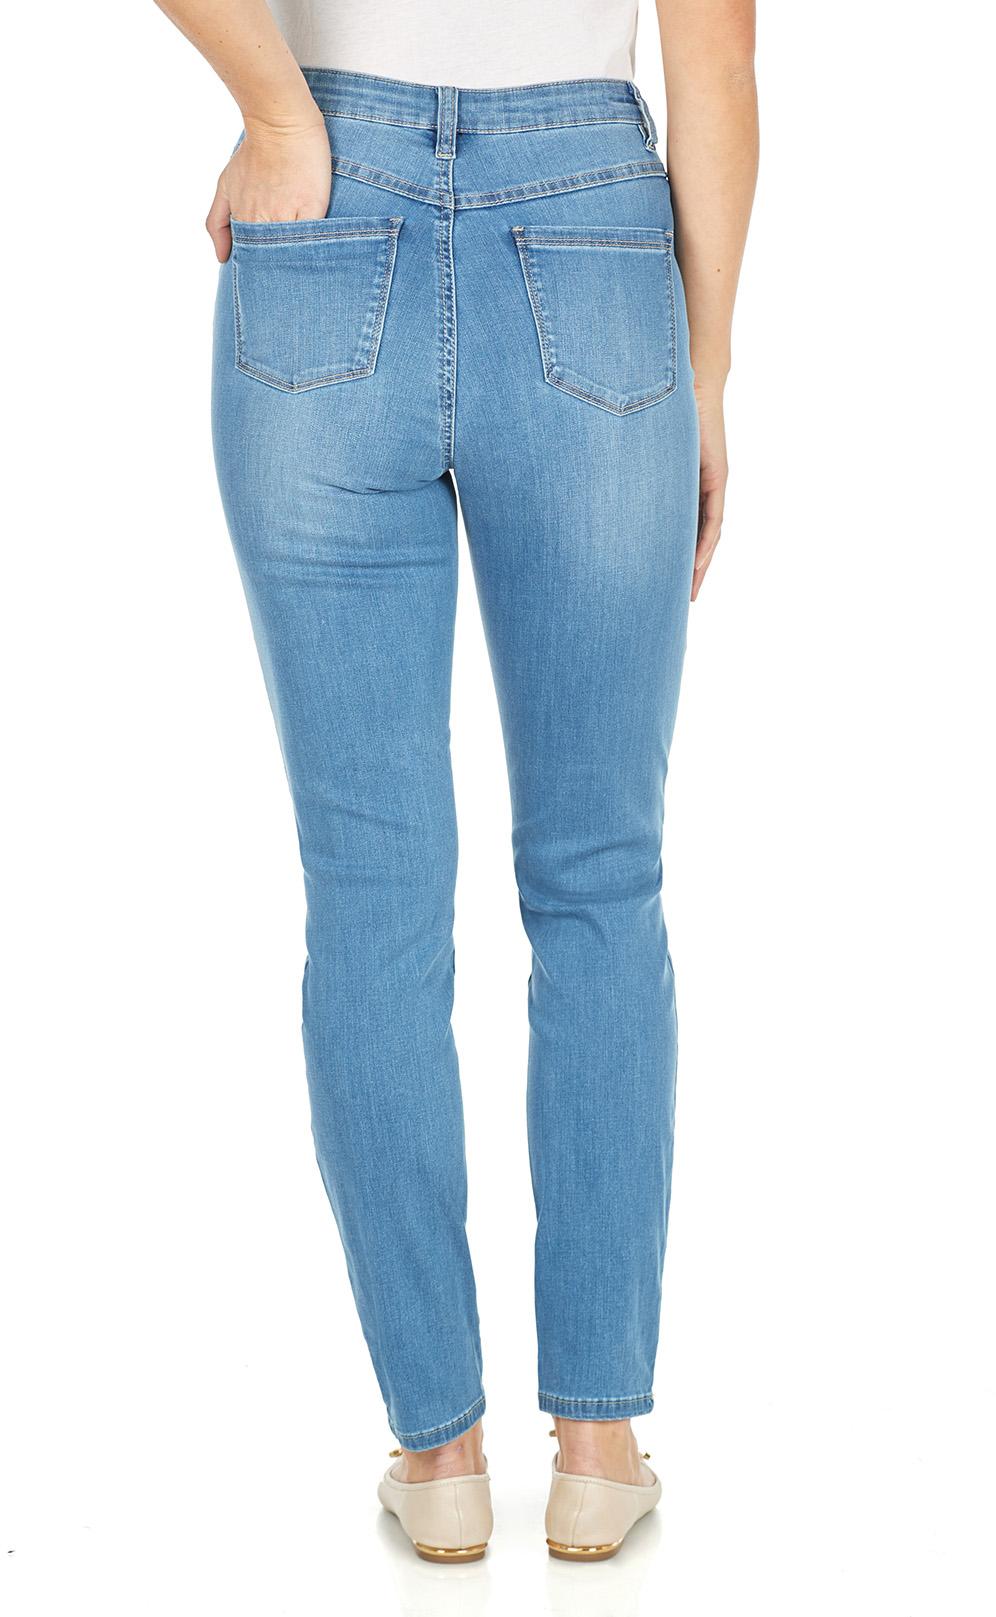 French Dressing Jeans Suzanne Slim Leg Cool Denim, High-Rise 